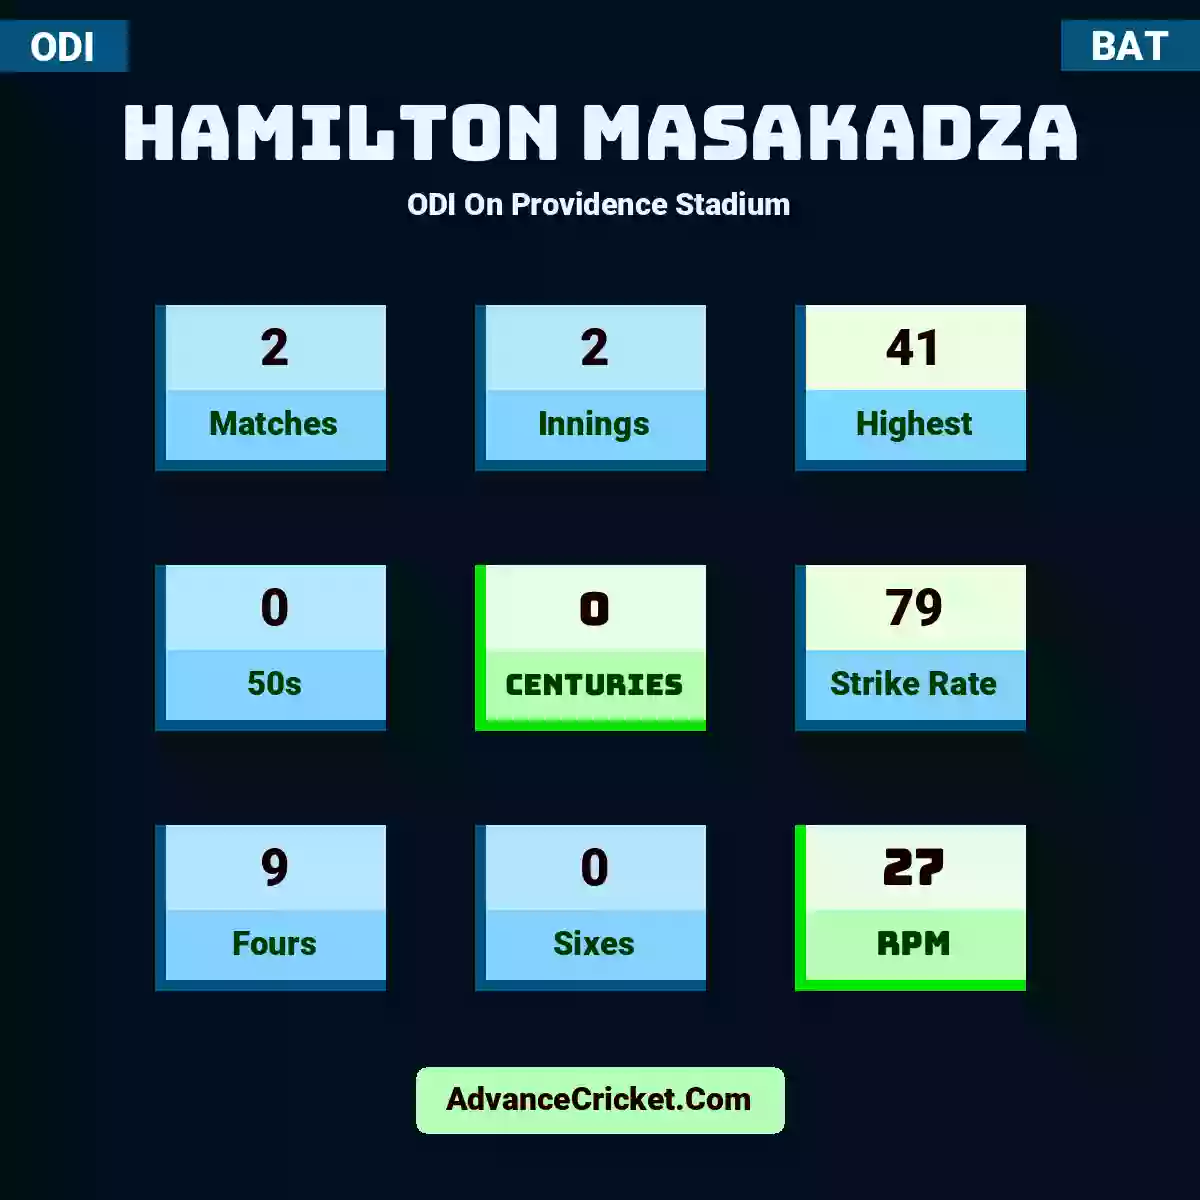 Hamilton Masakadza ODI  On Providence Stadium, Hamilton Masakadza played 2 matches, scored 41 runs as highest, 0 half-centuries, and 0 centuries, with a strike rate of 79. H.Masakadza hit 9 fours and 0 sixes, with an RPM of 27.